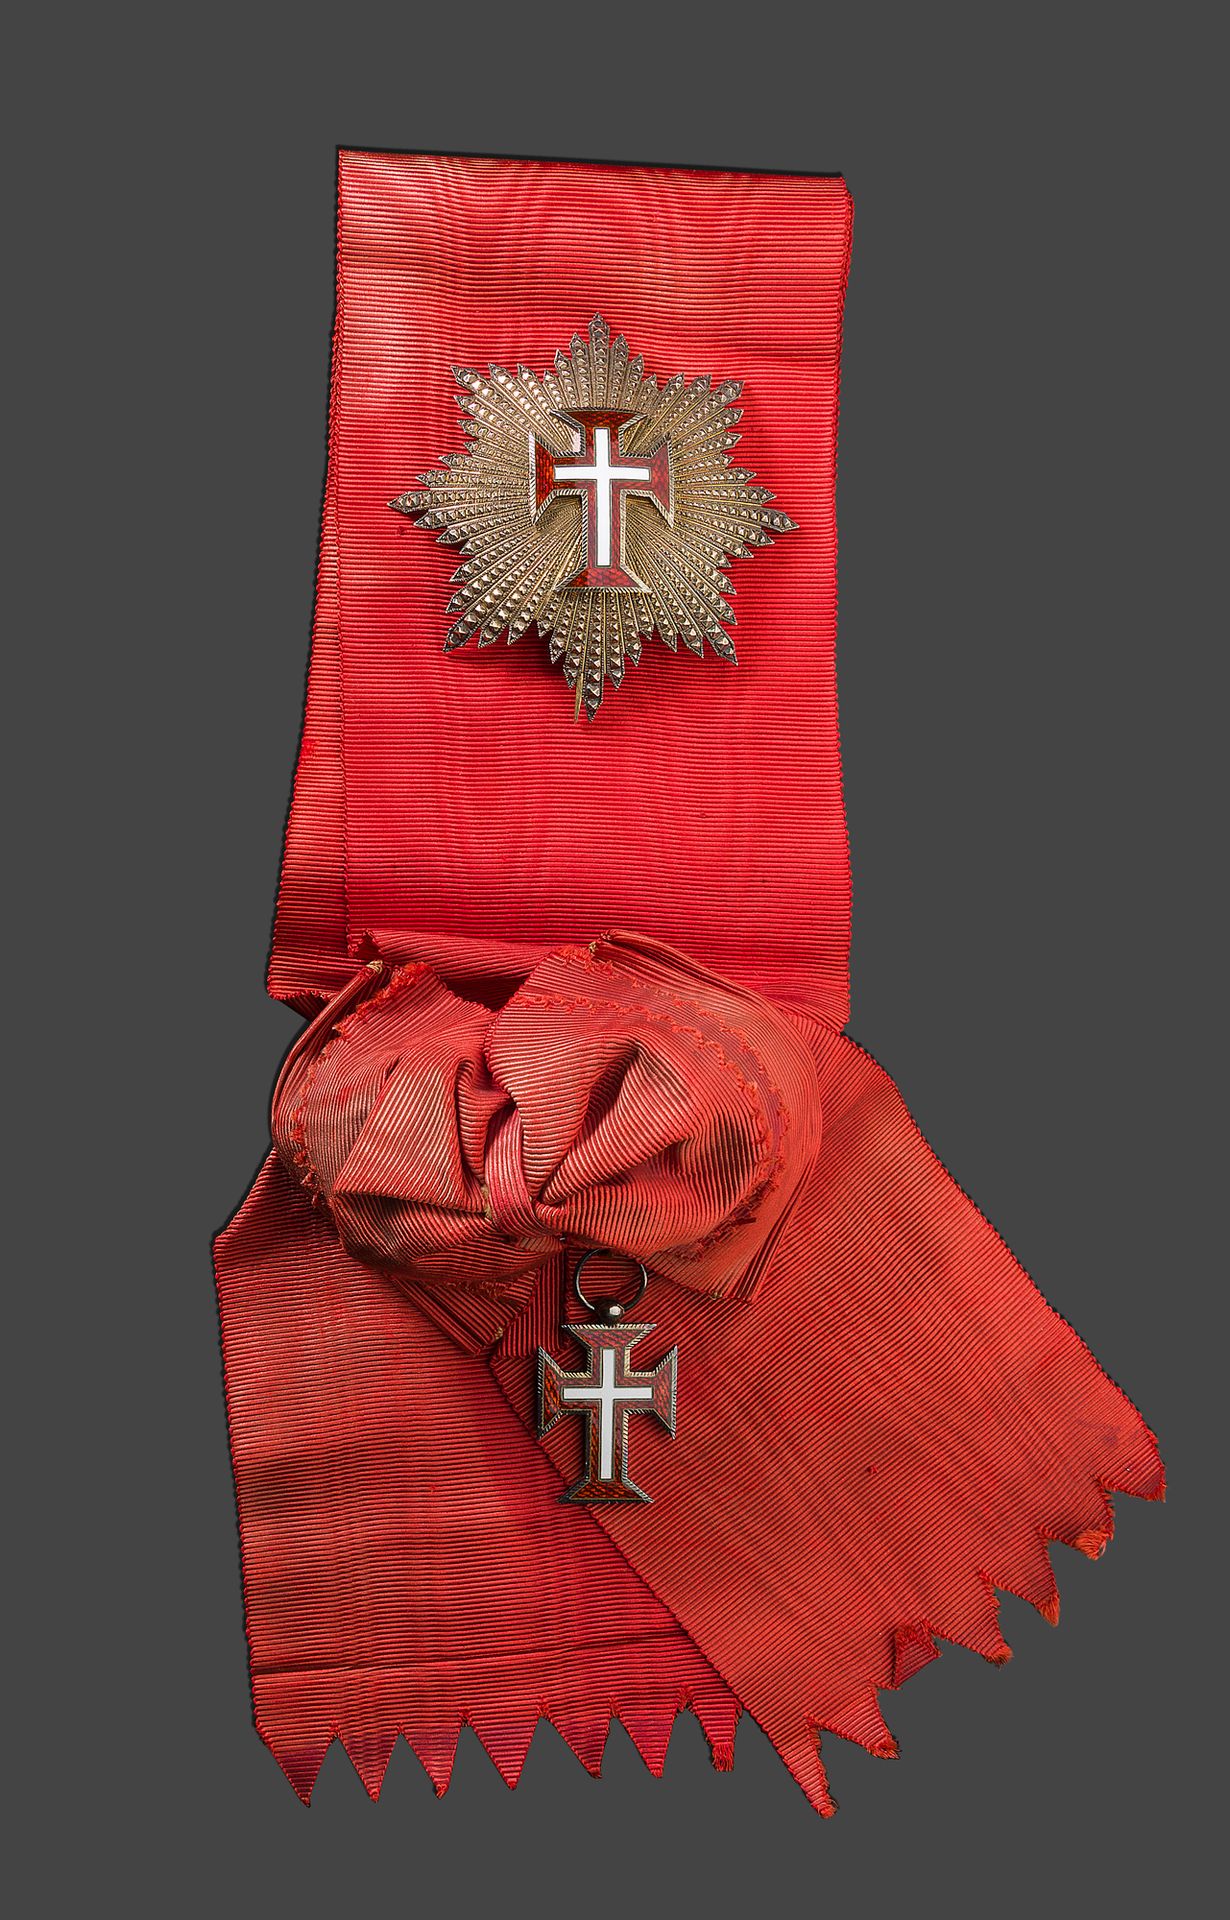 Null 葡萄牙 - 基督皇家军事教团，成立于1319年

银盘完全用钻石点加工，中间有一个红白珐琅的十字架。

反面有倾斜的附件，两个钩子，提到 "Lemaî&hellip;